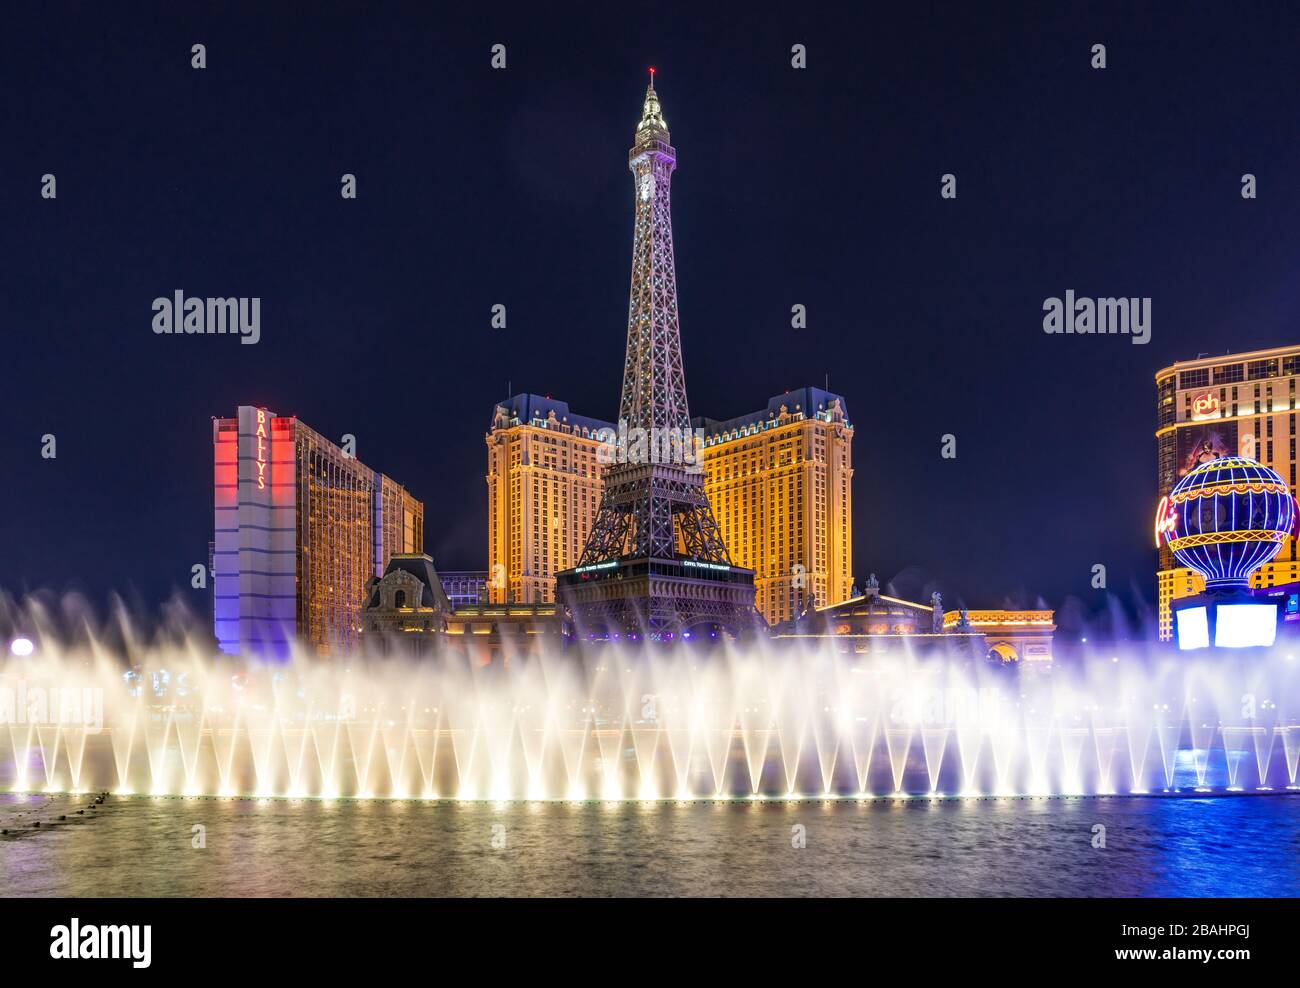 The Parisian casino and hotel complex along The Strip in Las Vegas ...